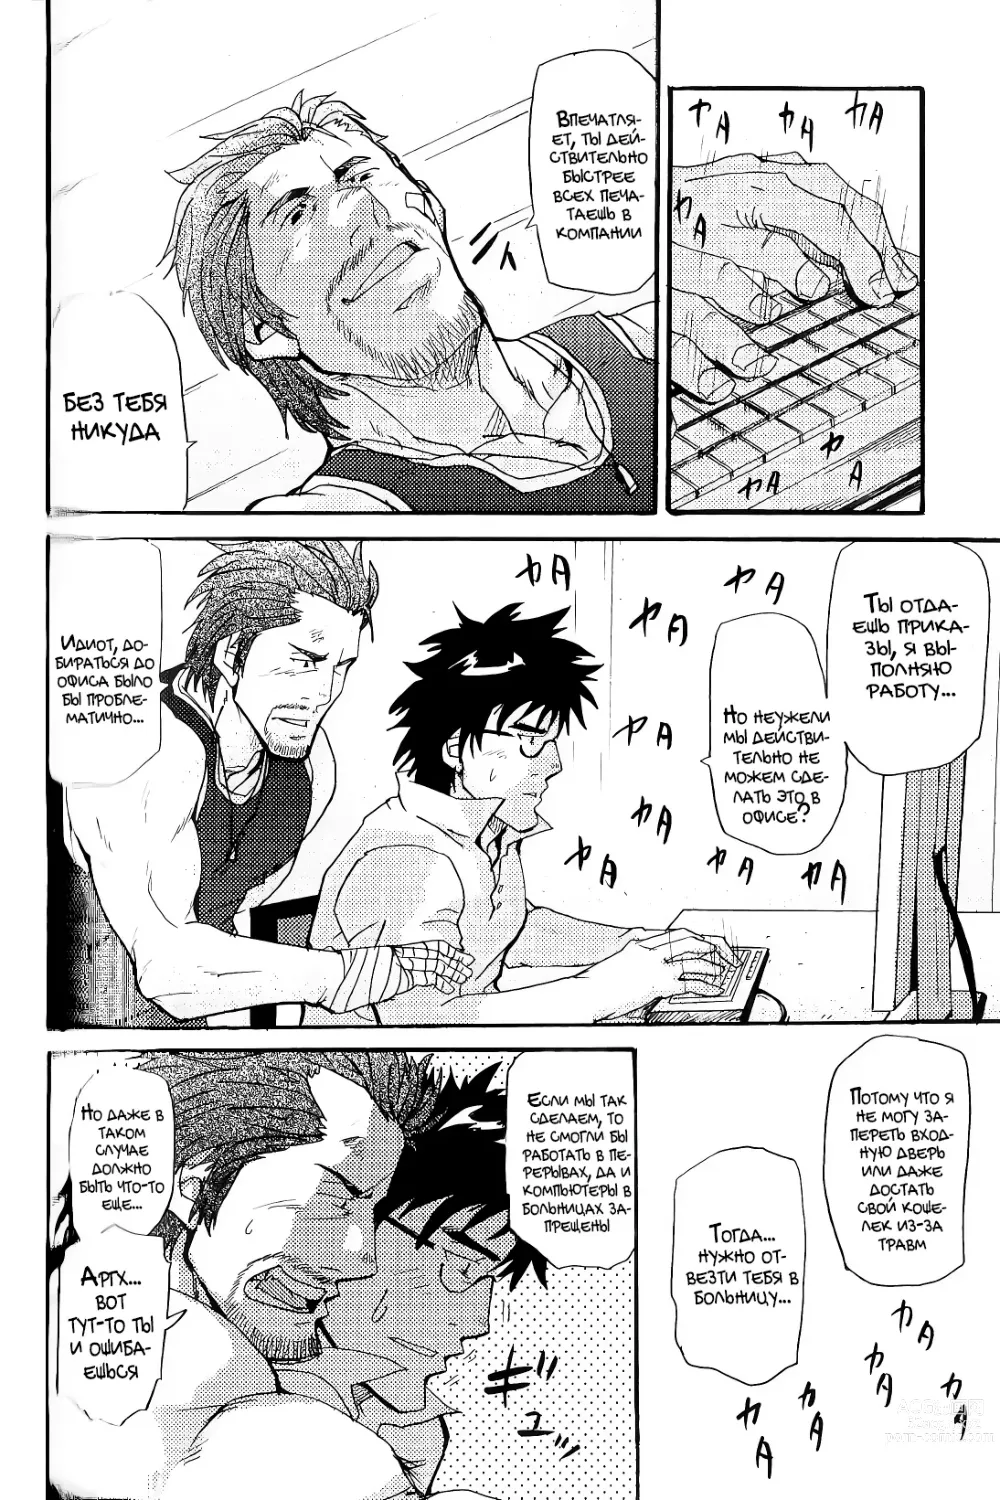 Page 6 of manga 10 дней жизни в одном хаори!!